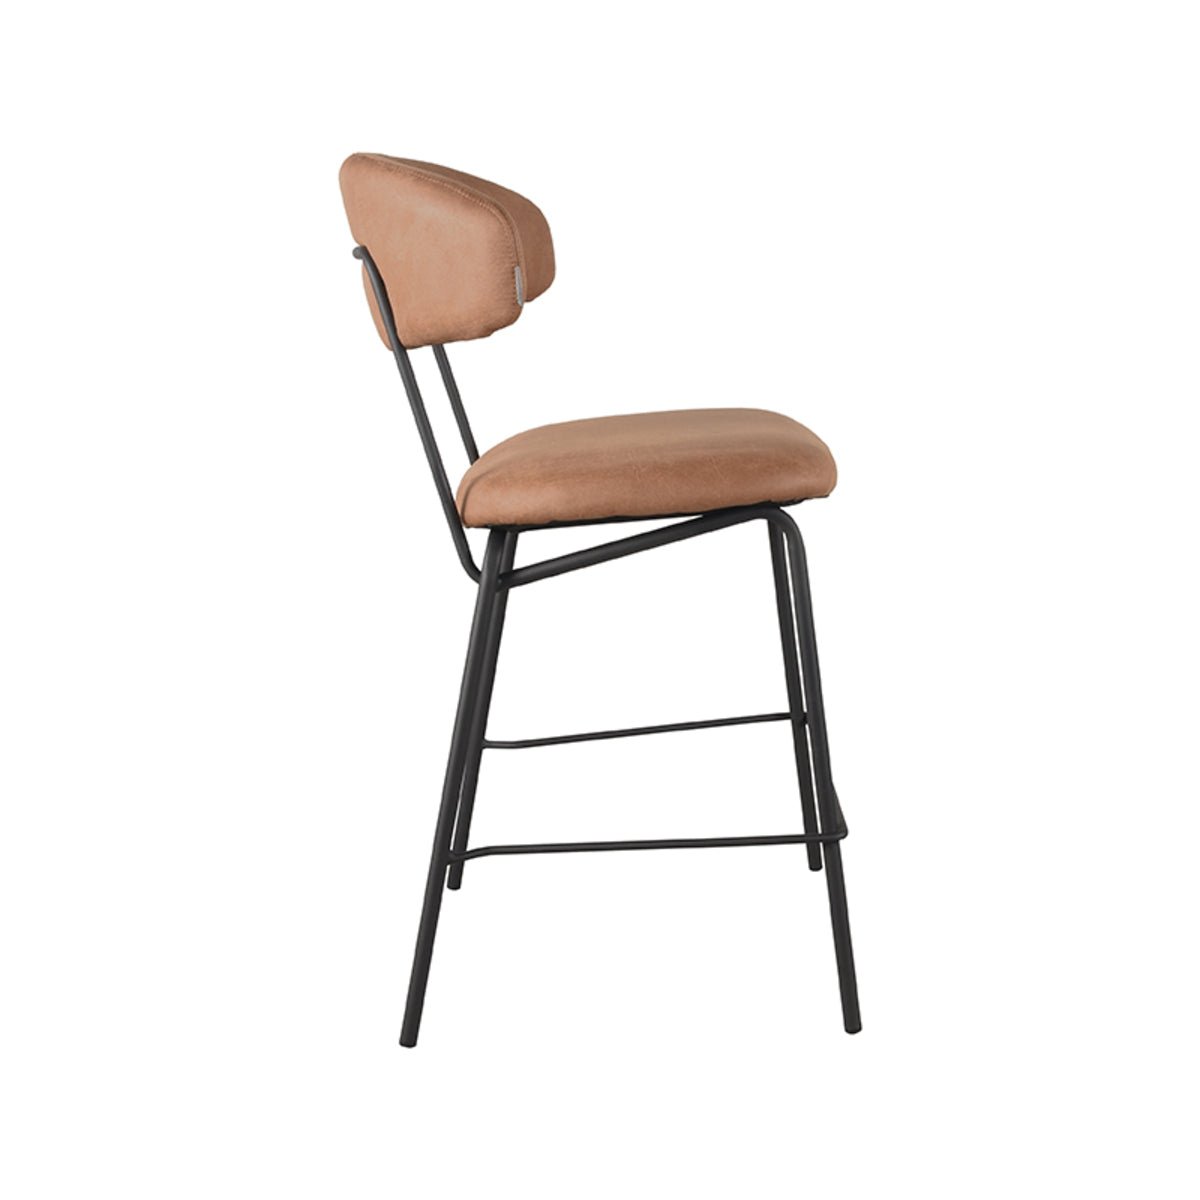 LABEL51 Bar stool Zack - Cognac - Microfiber - Seat height 65 |